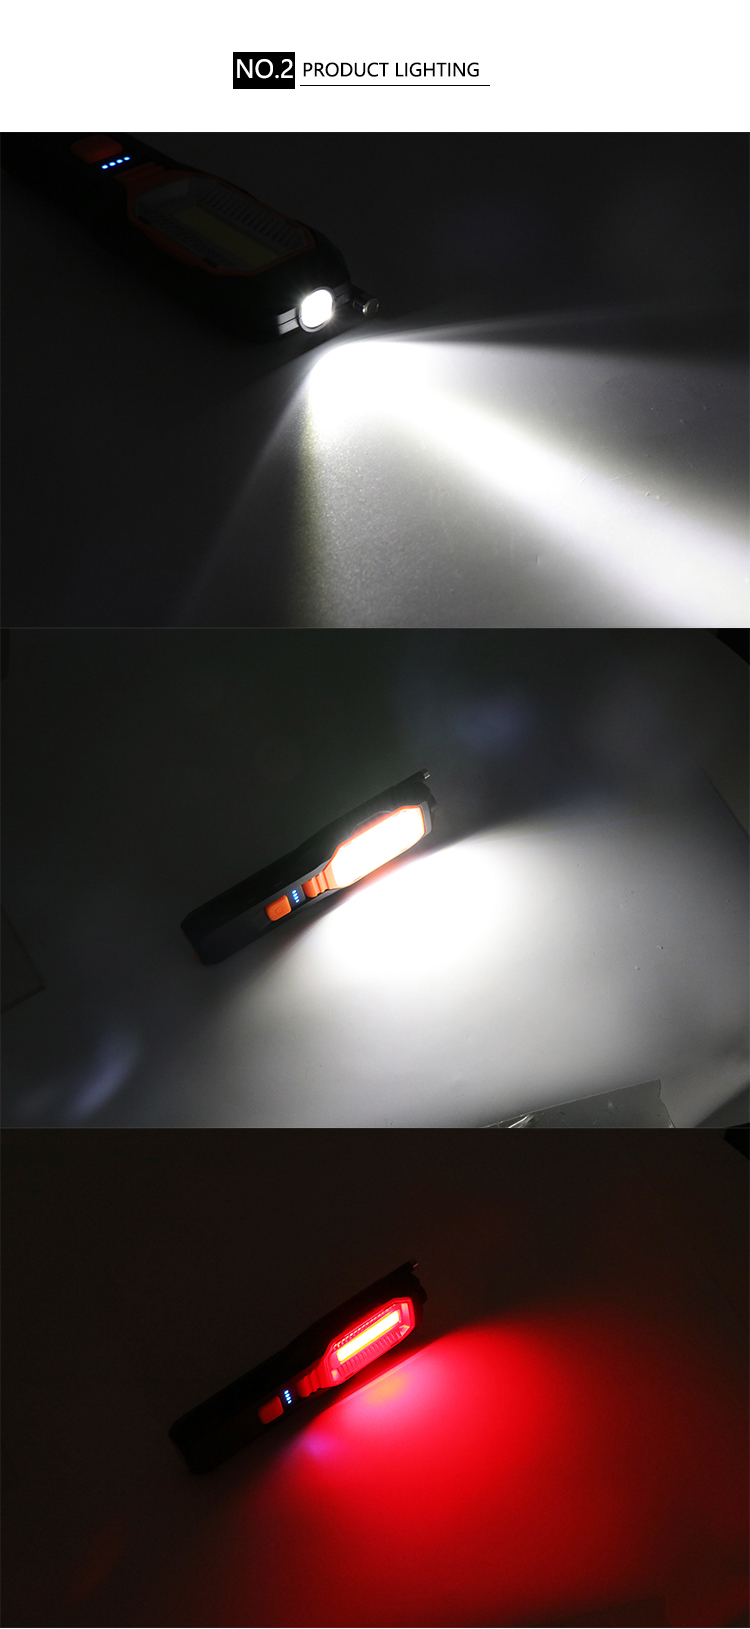 XANESreg-6302B-COB--LED-4-Modes-90deg-Rotating-Head-Flashlight-USB-Rechargeable-Work-Light-1417656